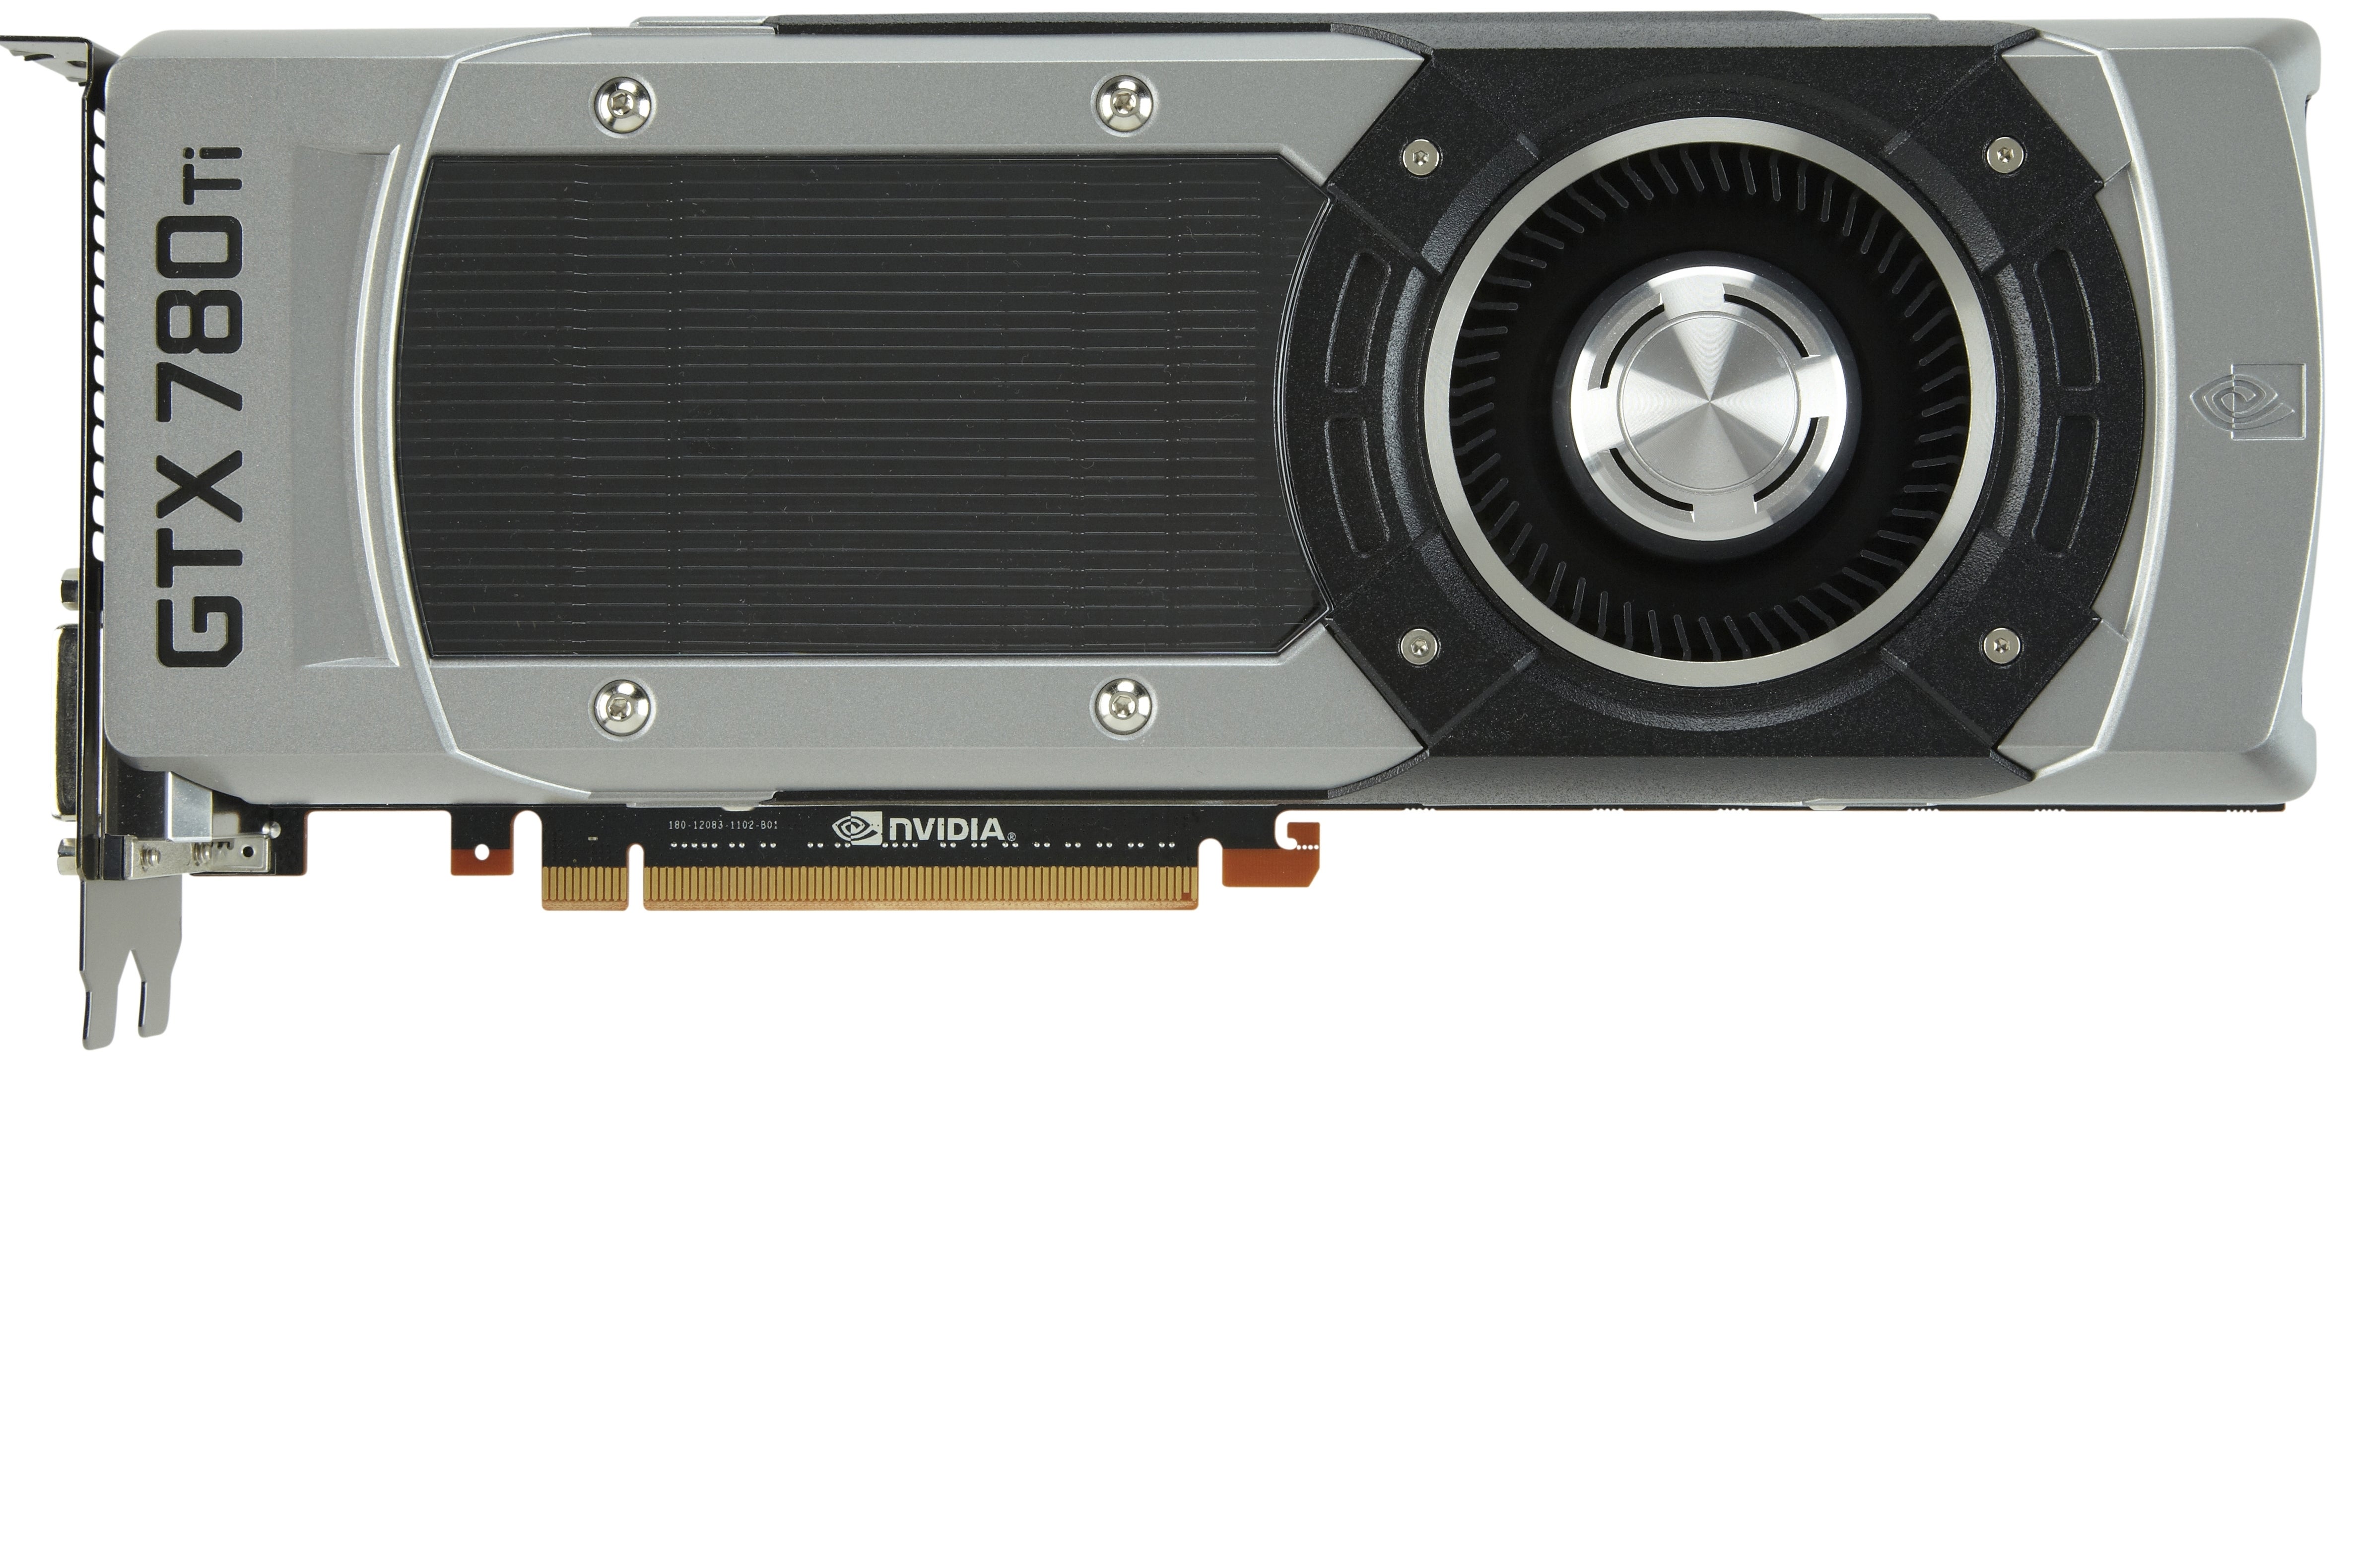 Nvidia GeForce GTX 780 Ti review | Eurogamer.net